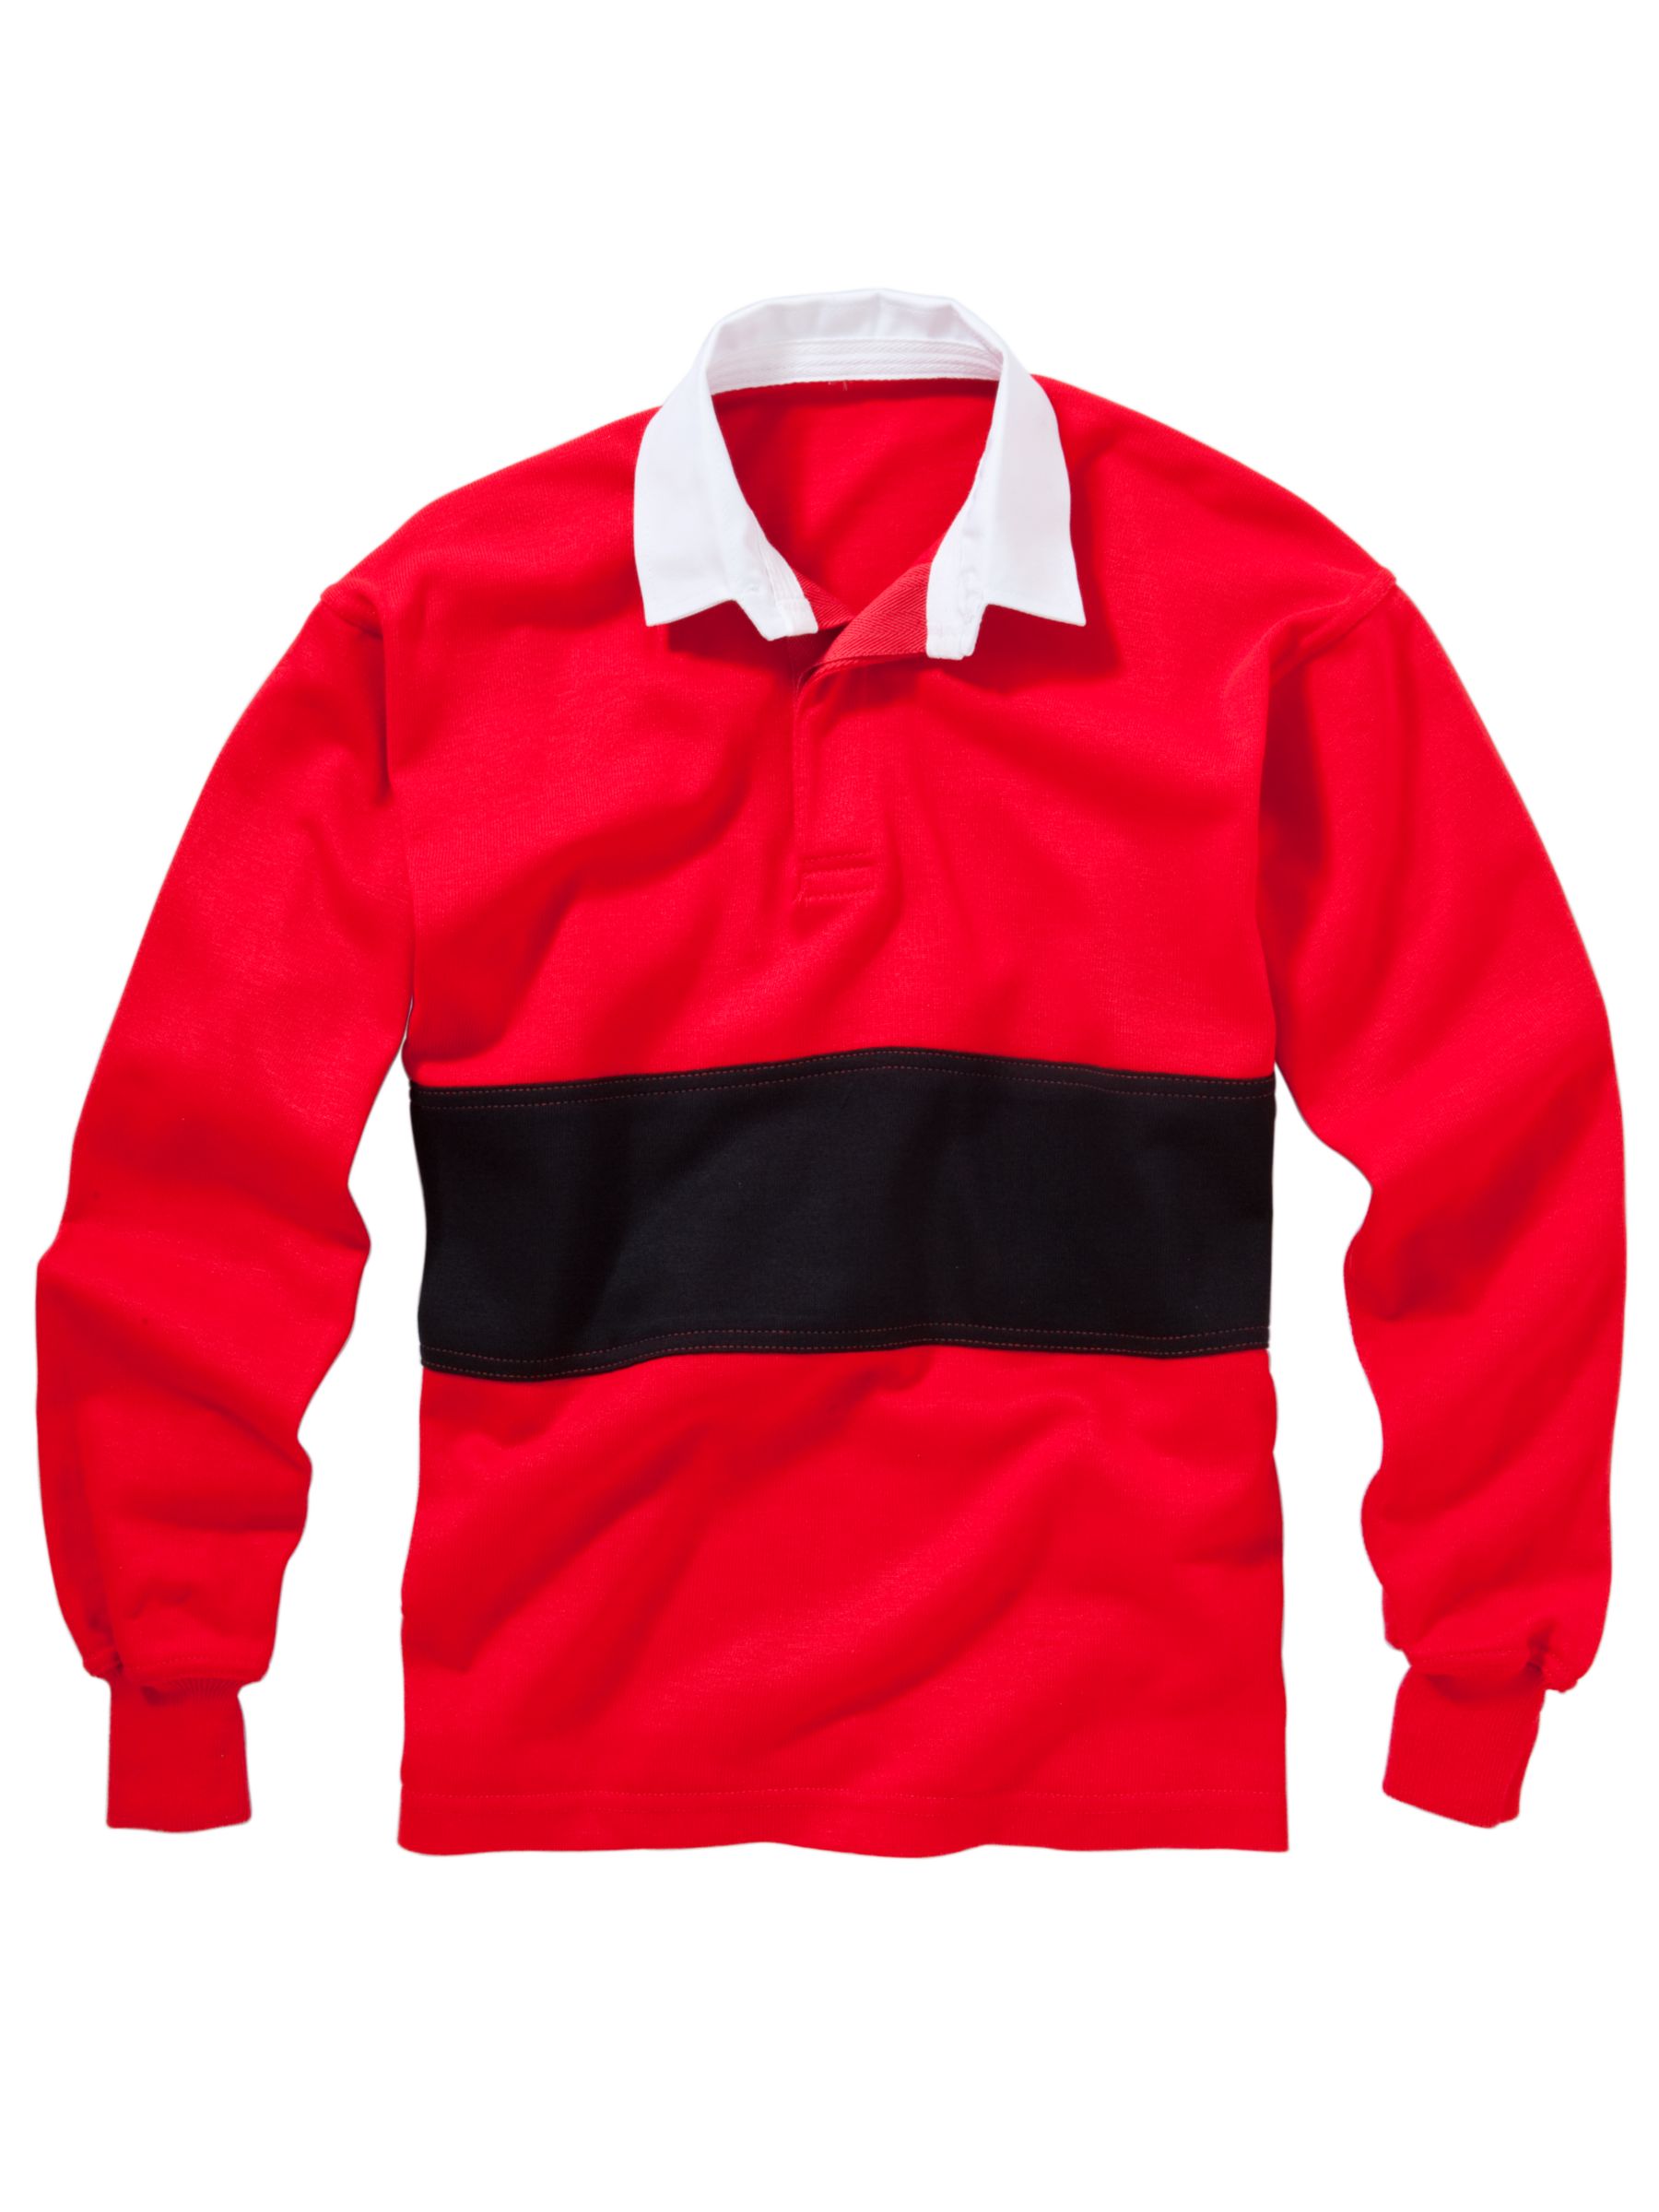 Boys Rugby Shirt, Red/Black